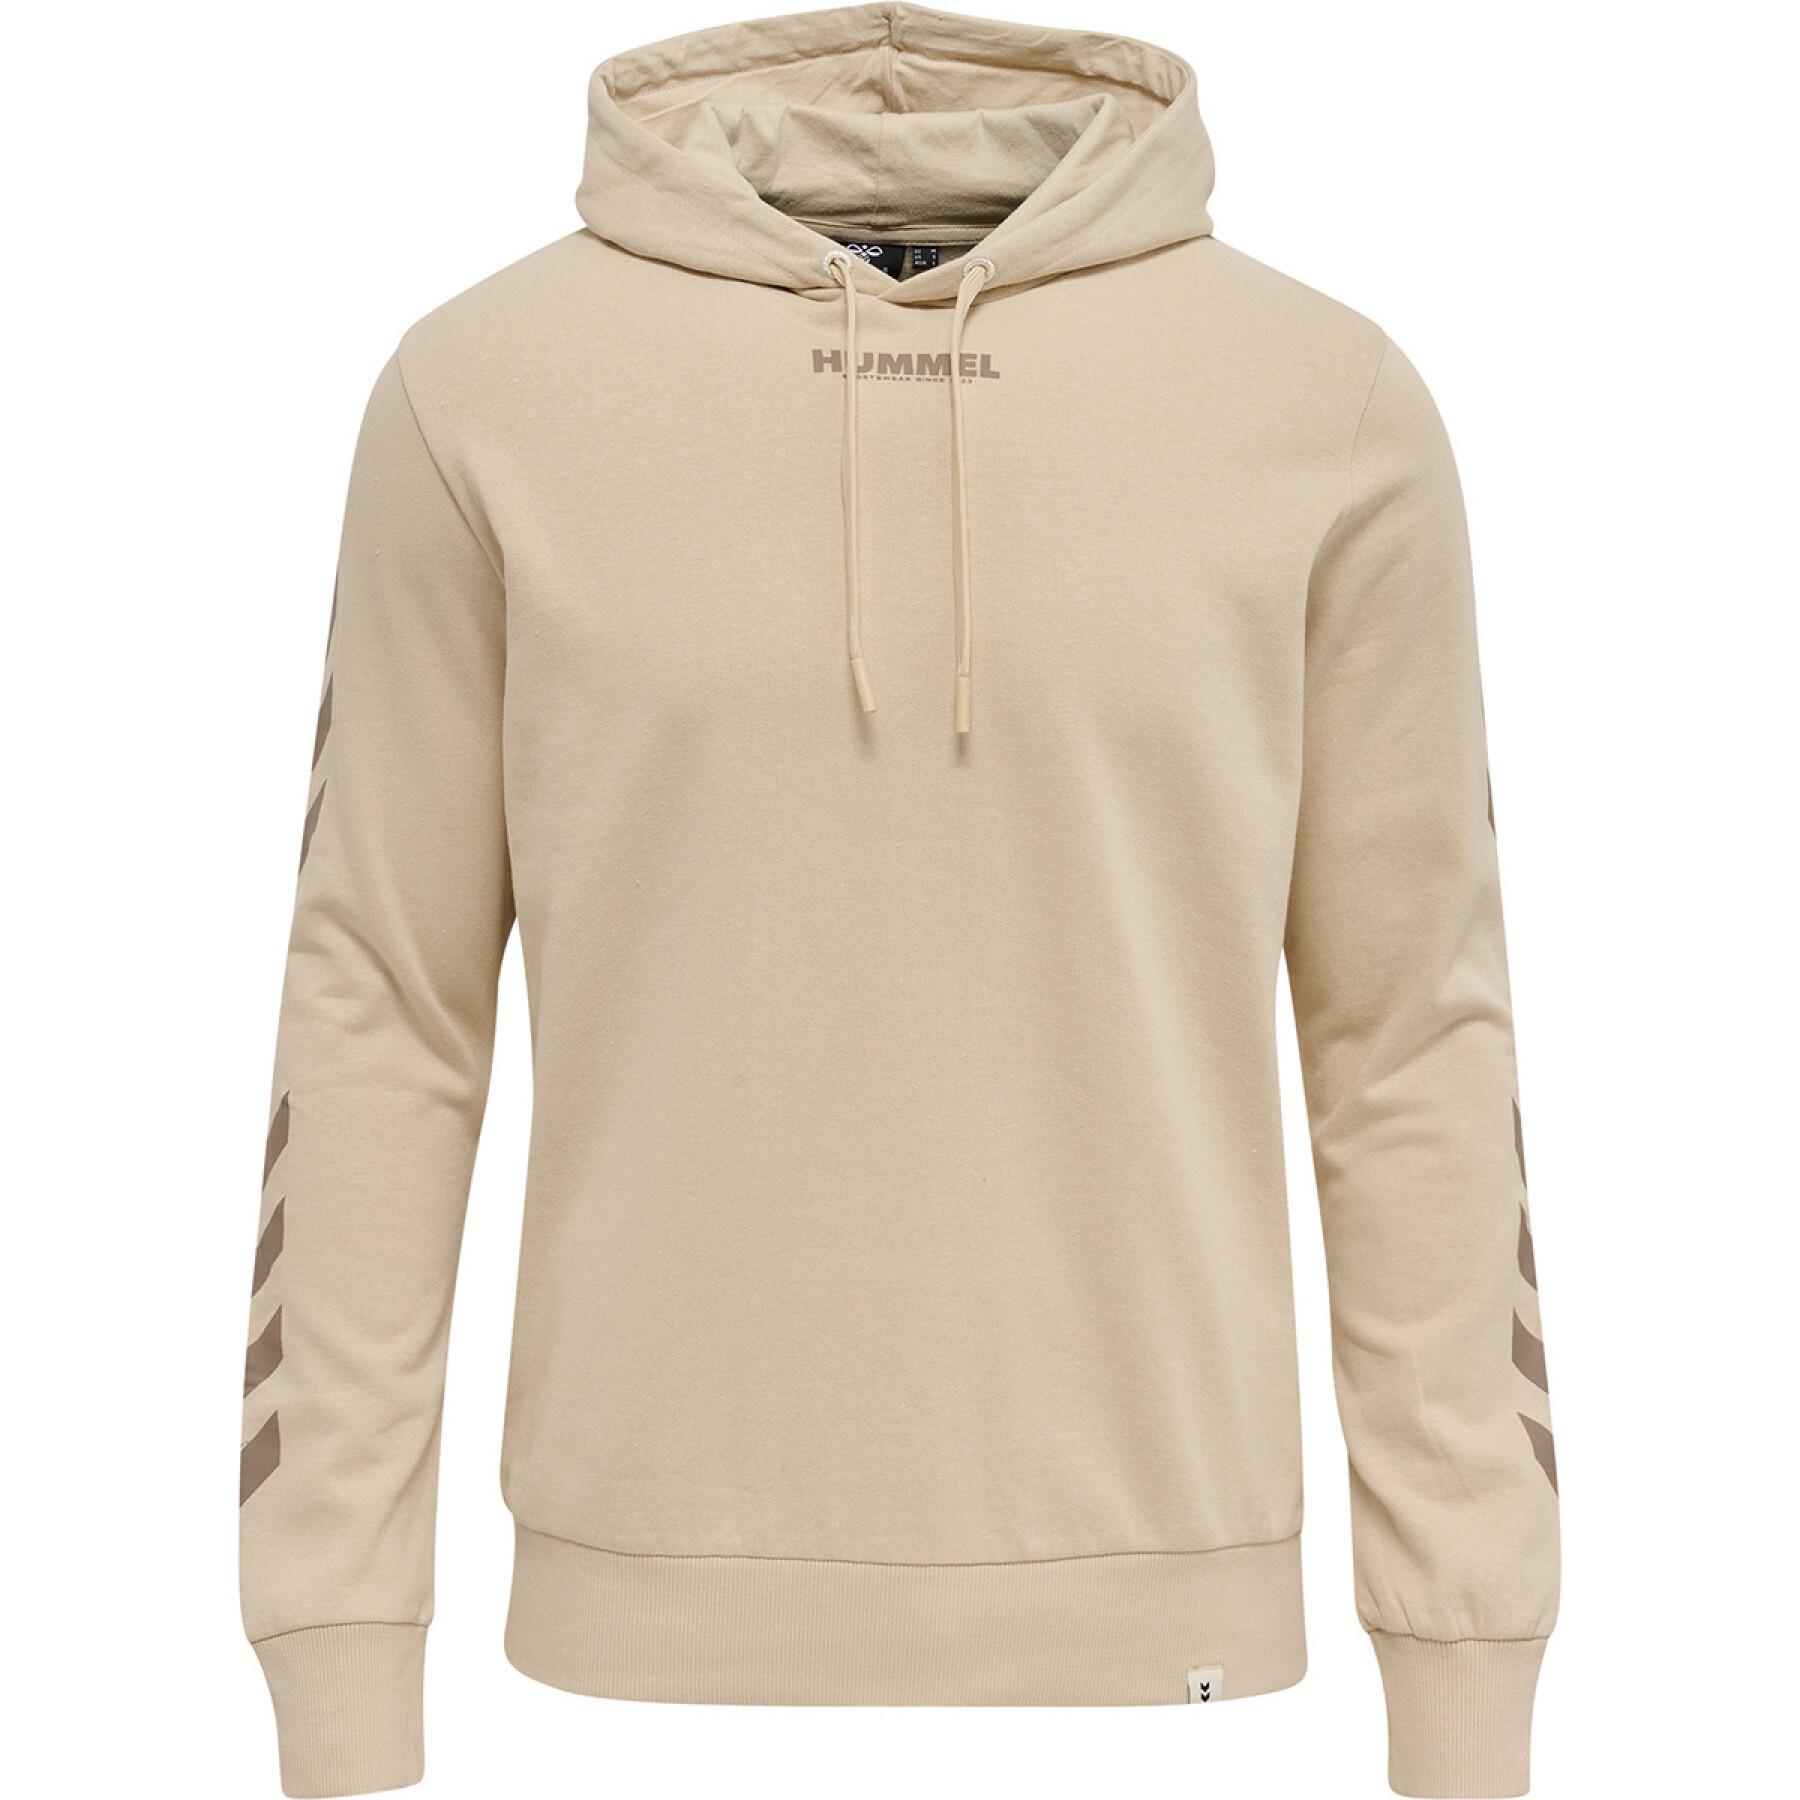 Hooded sweatshirt - hmlLegacy Lifestyle - Categories Hummel Sweatshirts 